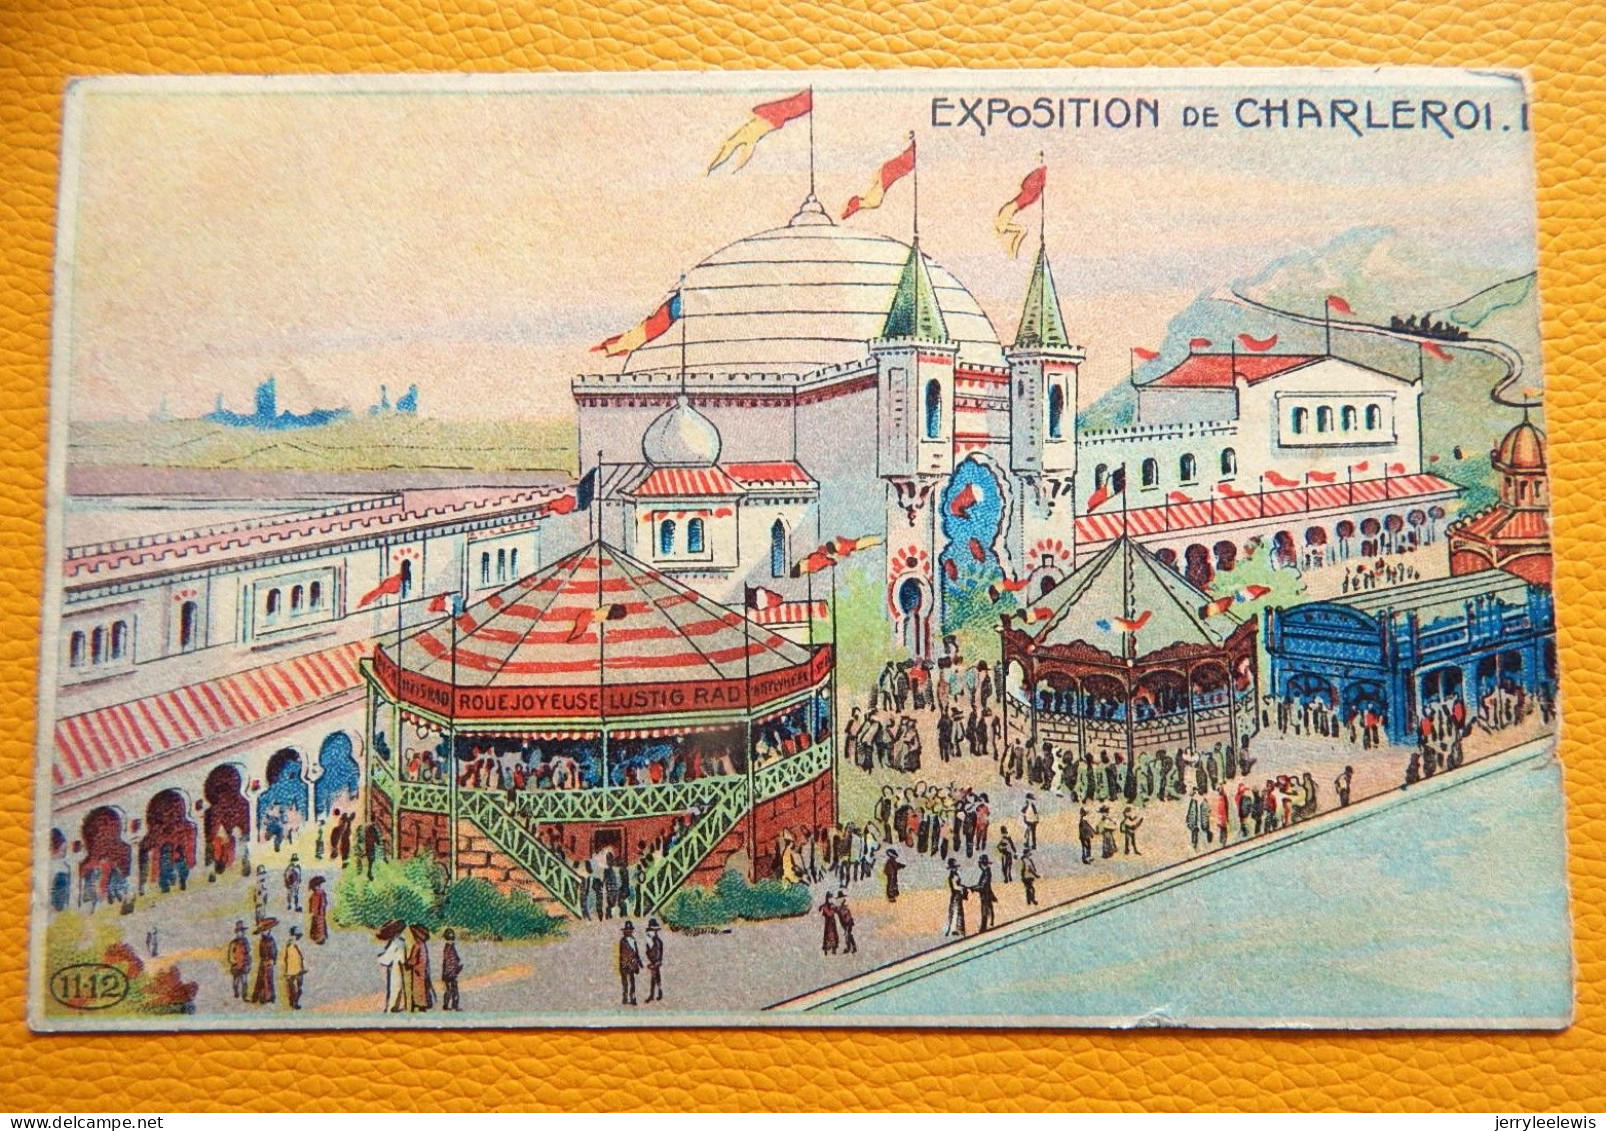 CHARLEROI  EXPOSITION DE 1911  -    Luna-Gardens - Attarctions - Charleroi